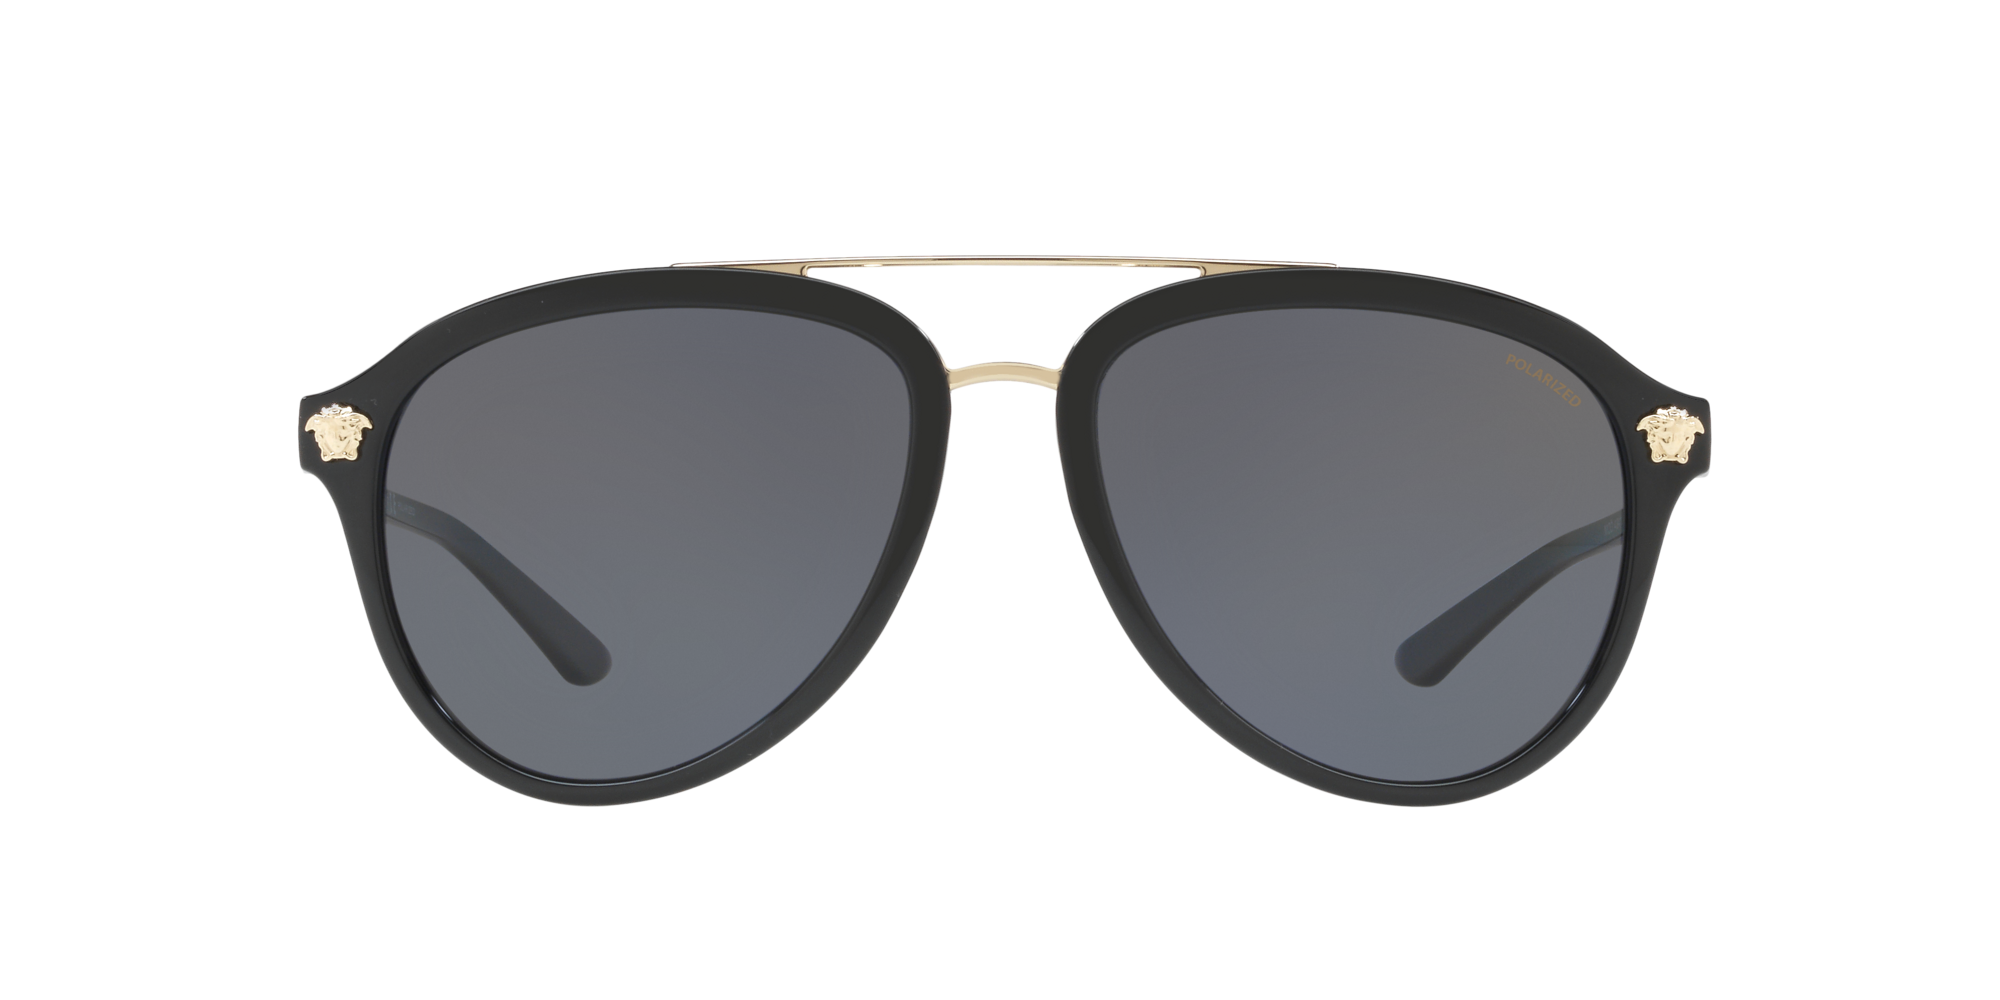 versace polarized sunglasses ve4341